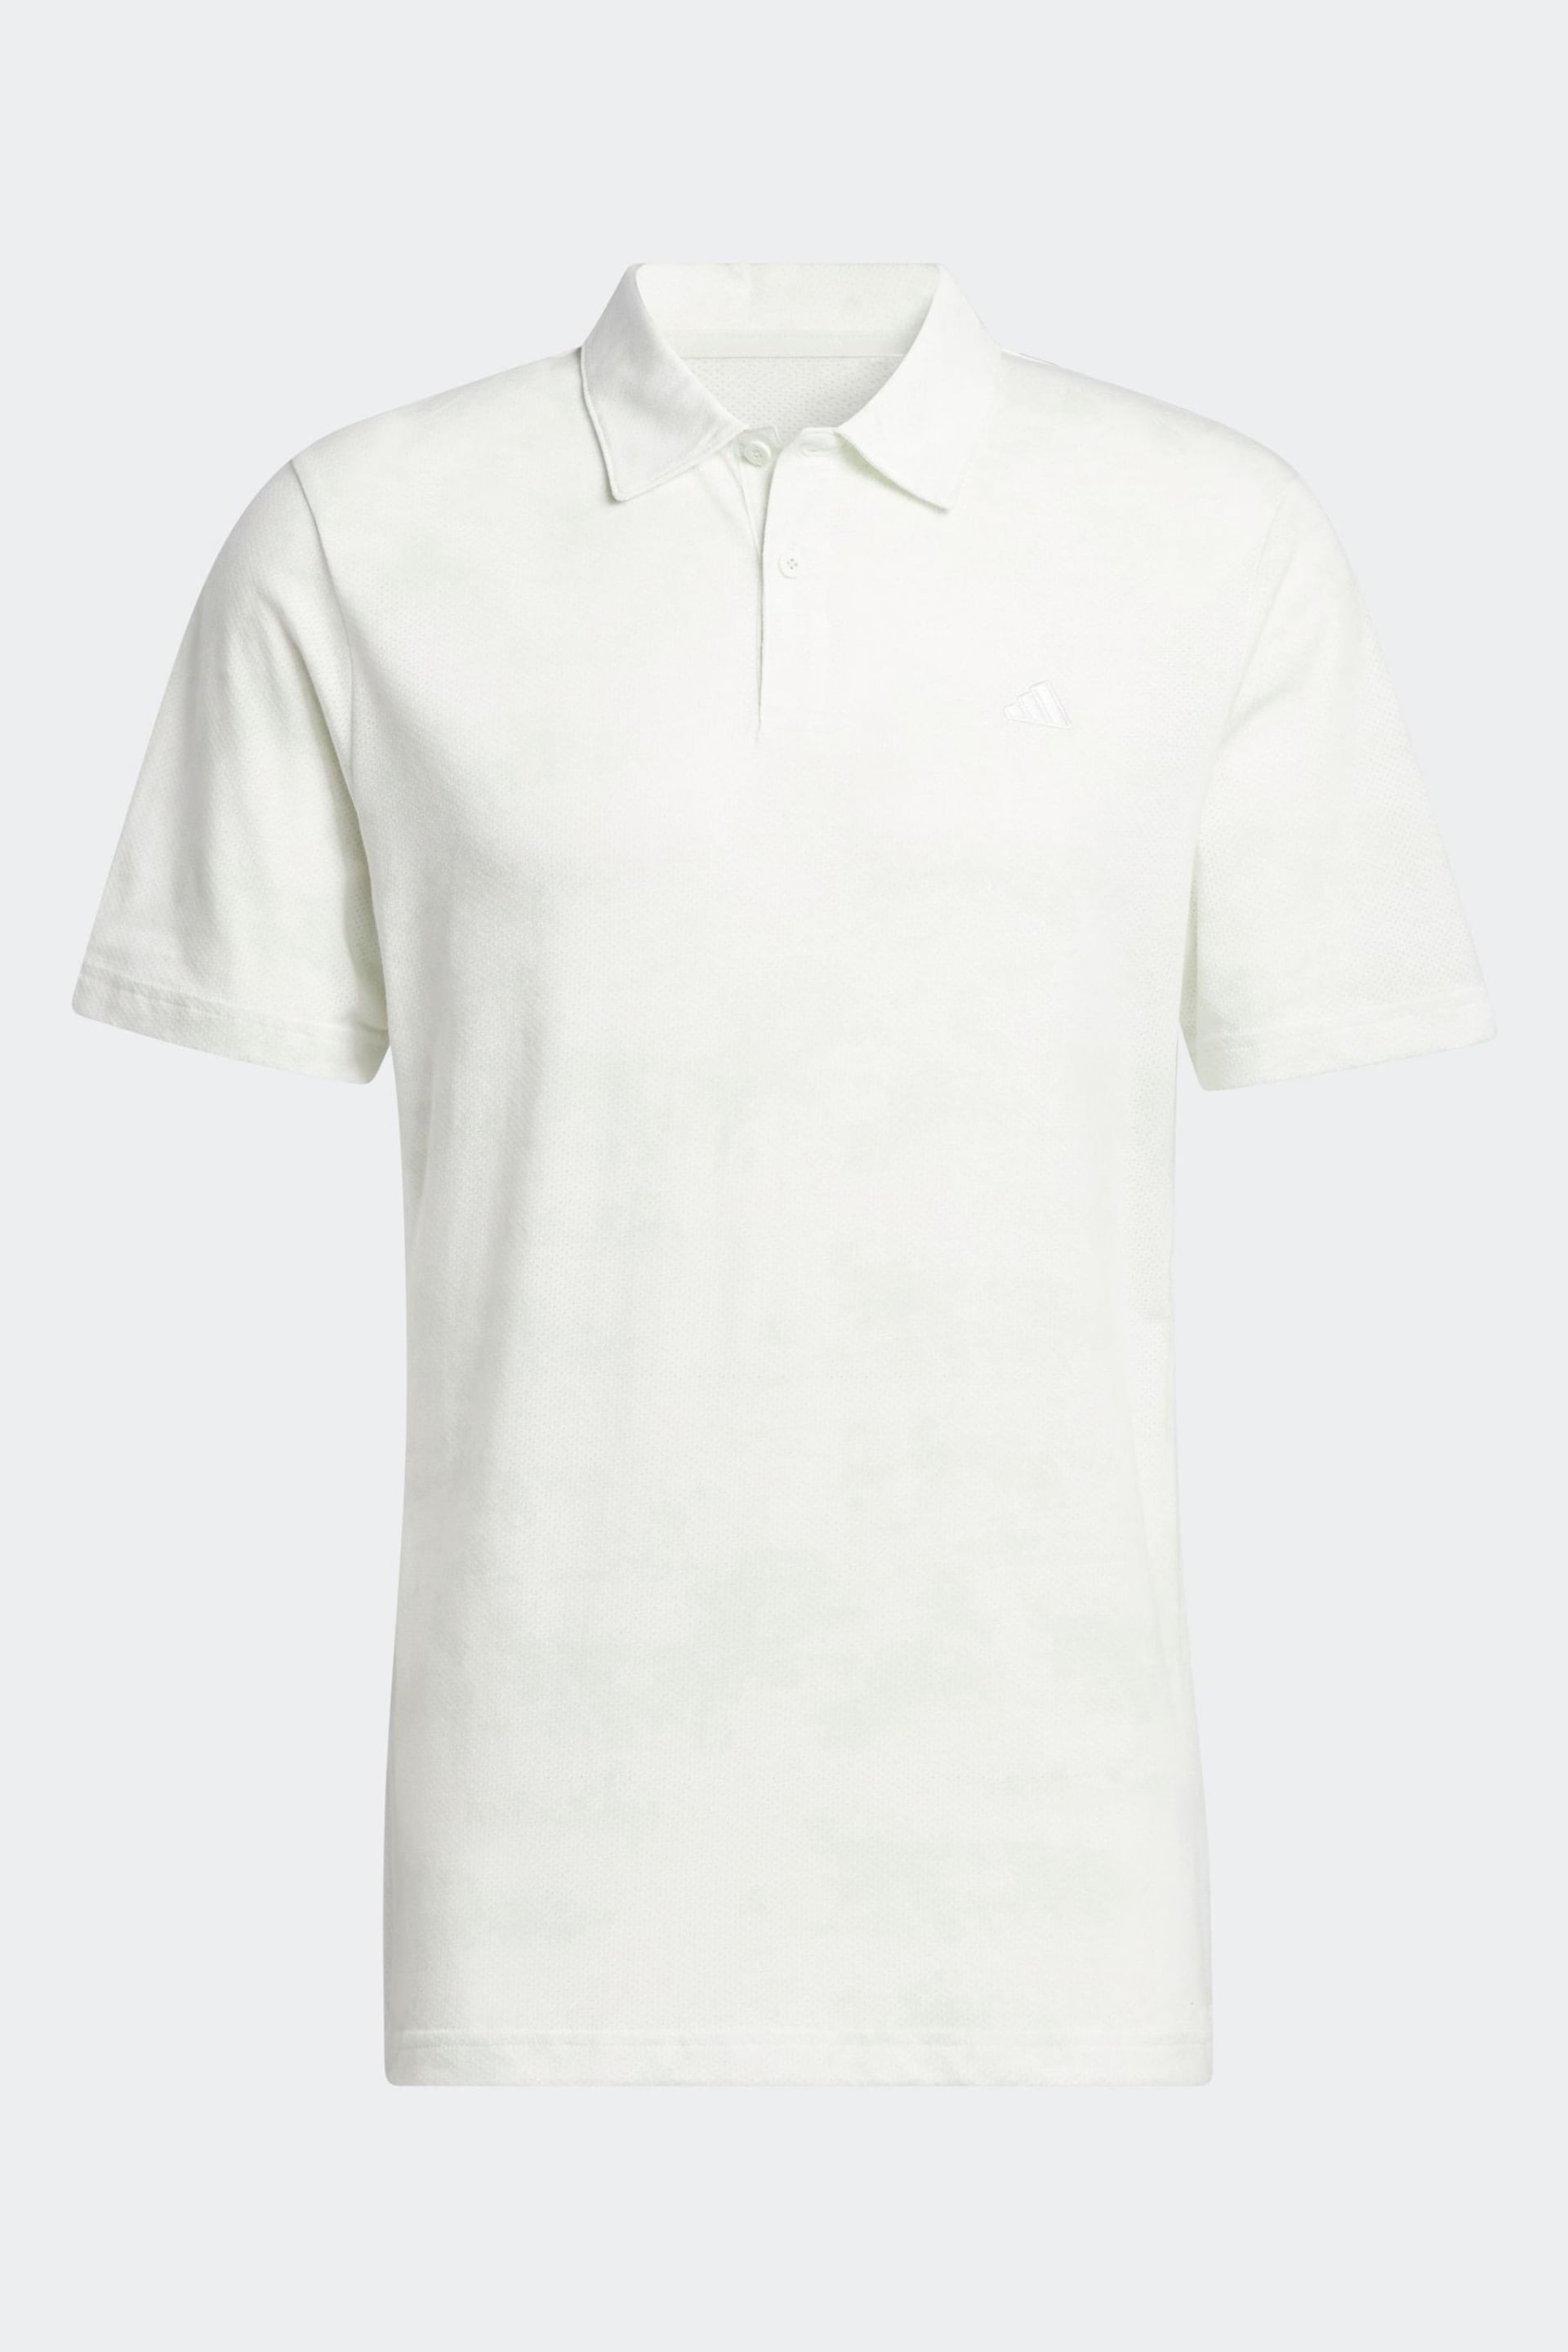 adidas Golf Light White Go To Printed Mesh Polo Shirt - Image 7 of 7